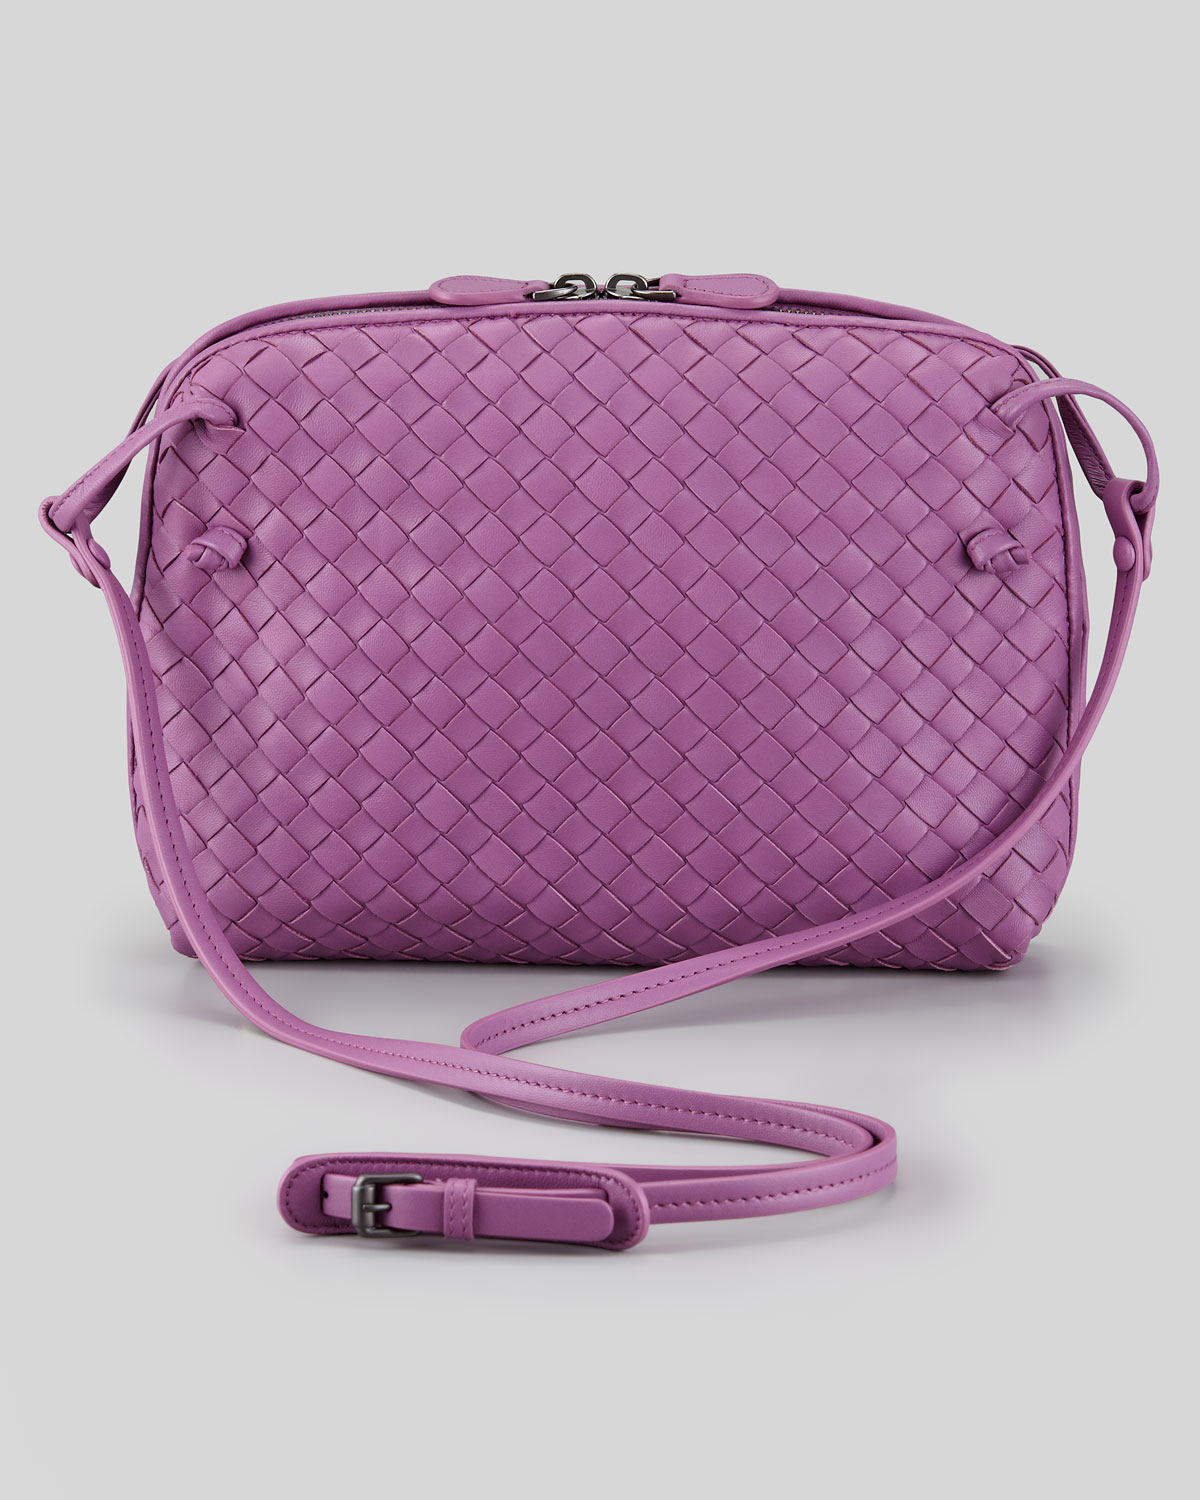 Bottega Veneta Veneta Small Crossbody Bag in Purple - Lyst